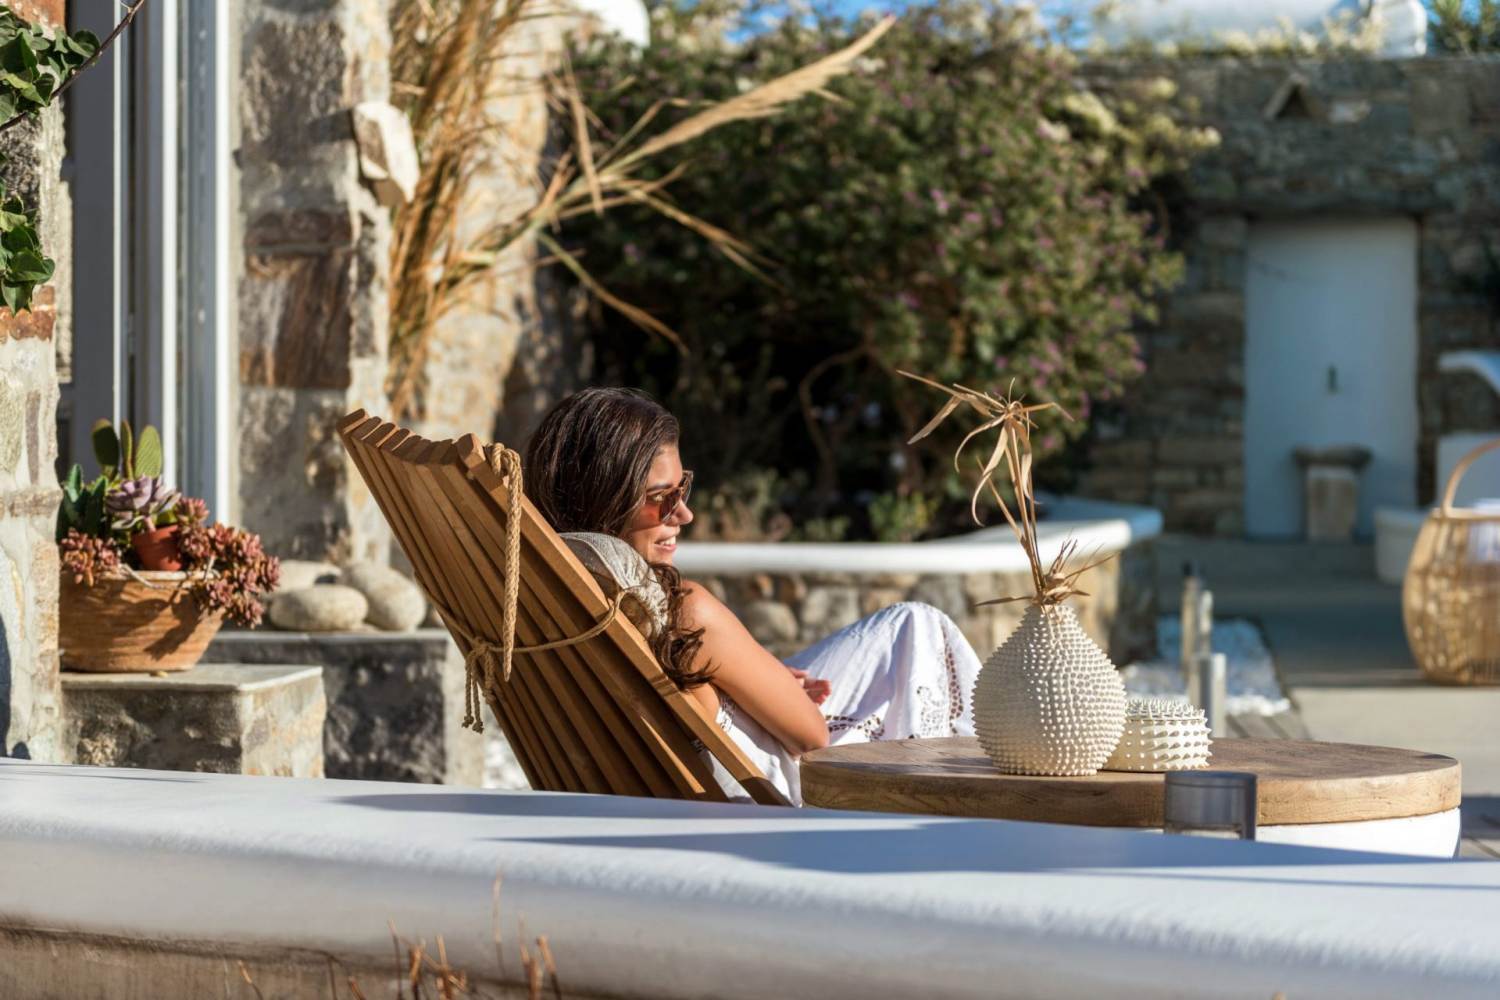 A Hotel Mykonos, Cycladic Islands - Greece